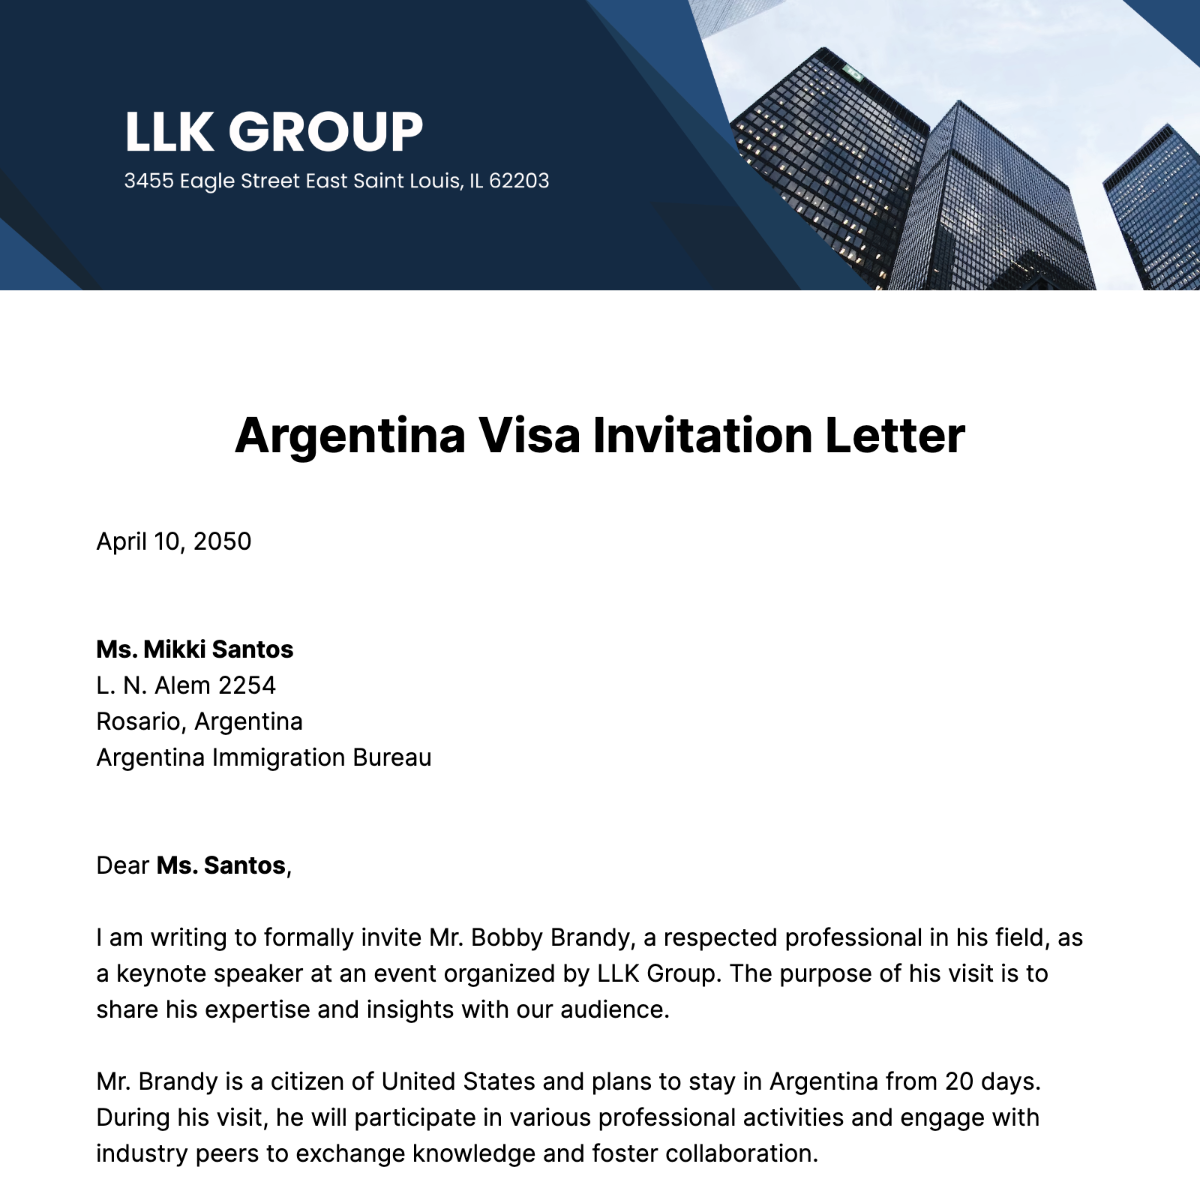 Argentina Visa Invitation Letter Template